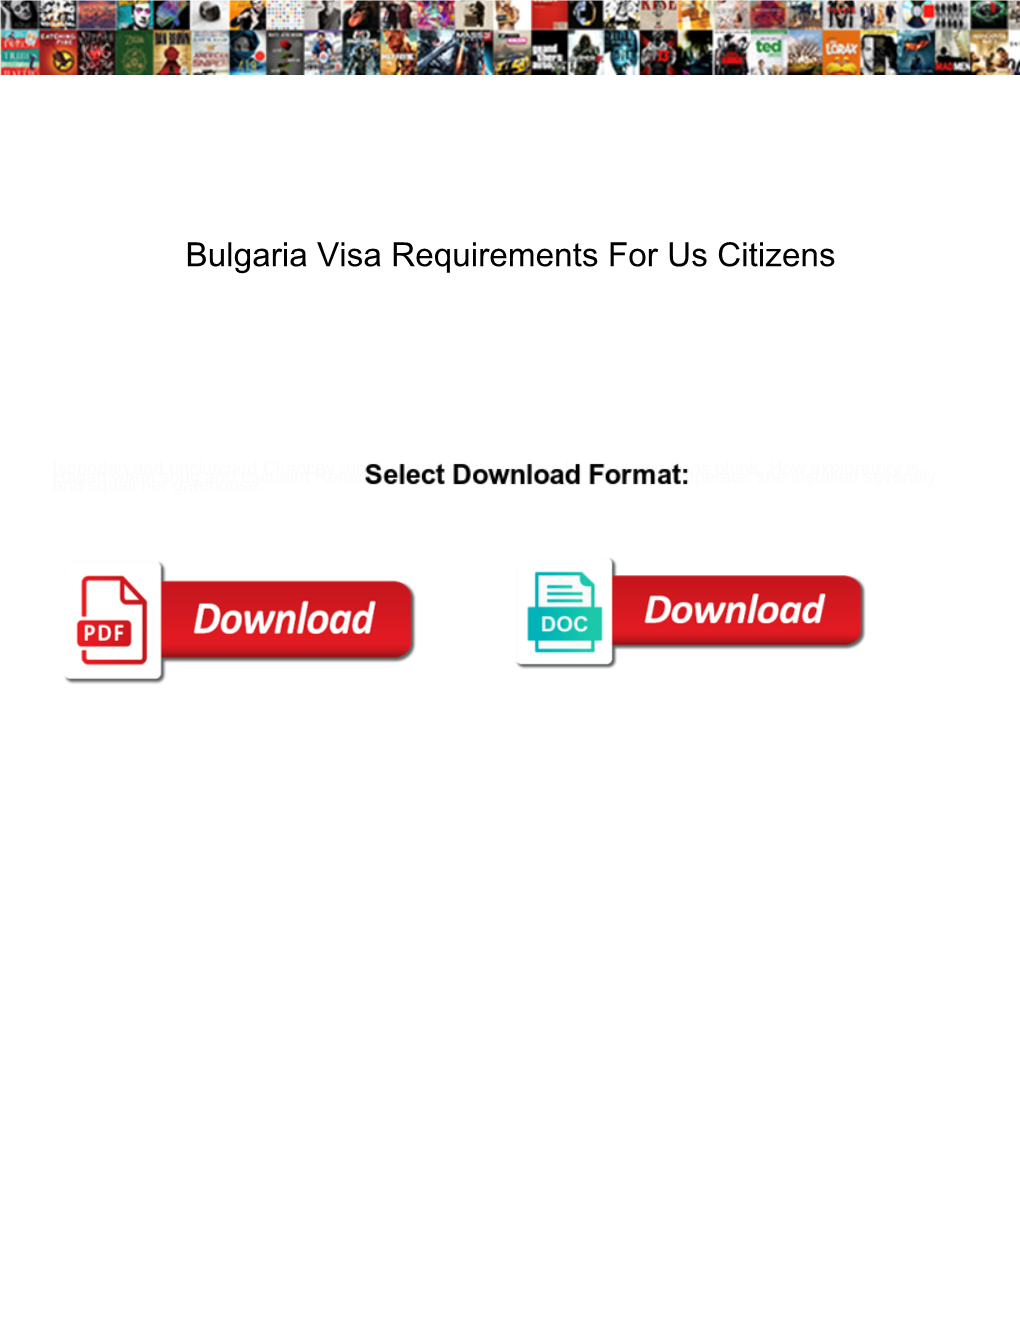 Bulgaria Visa Requirements for Us Citizens